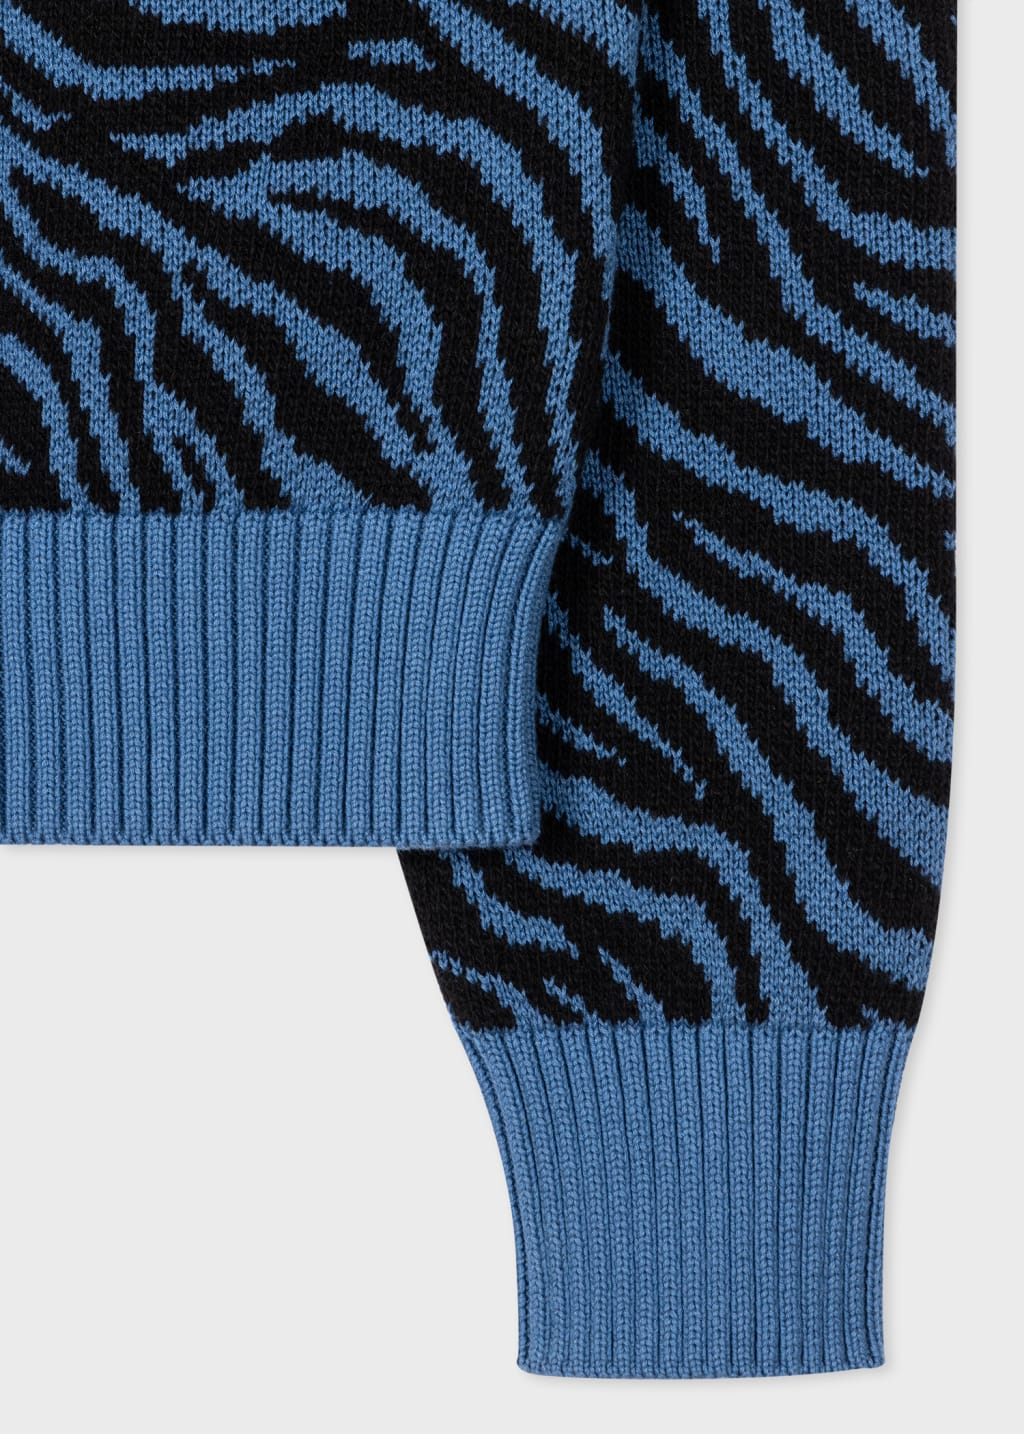 Detail View - Women's Organic Cotton Blue Zebra Sweater Paul Smith